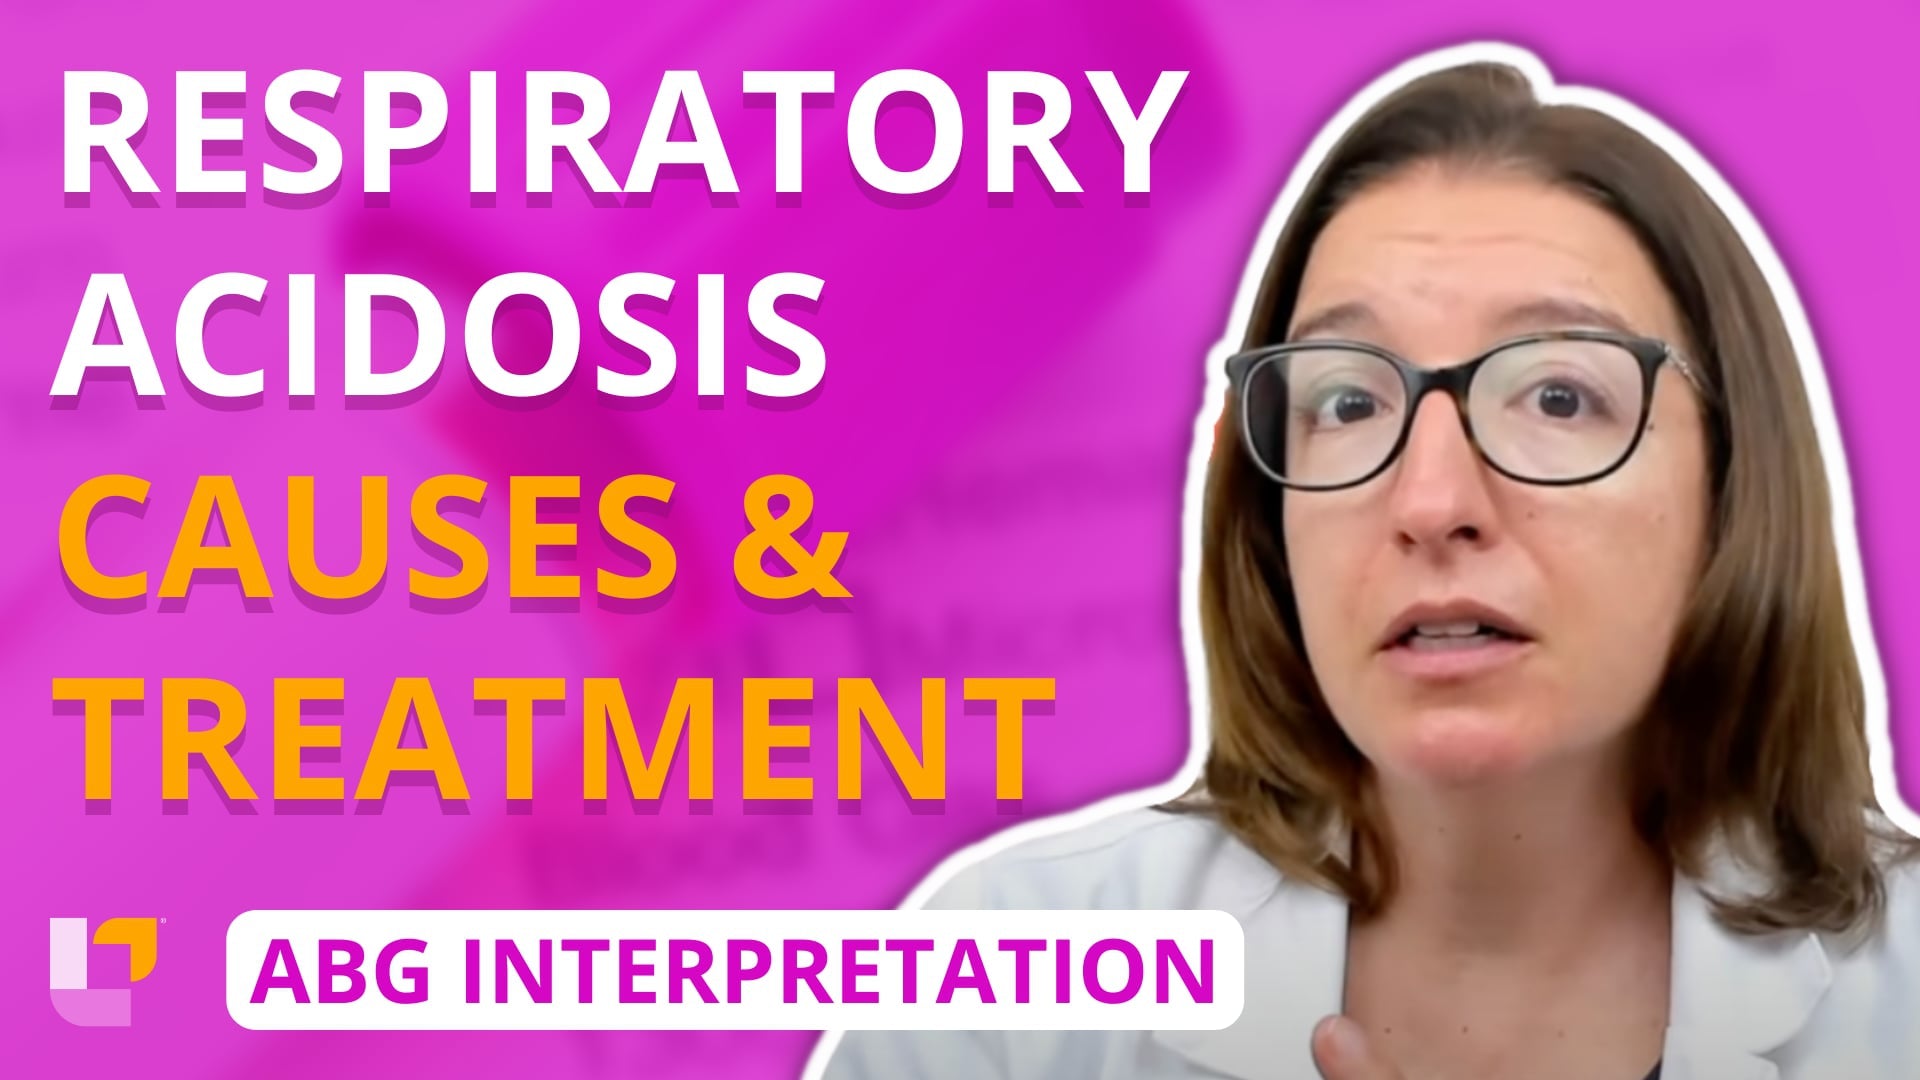 ABG Interpretation, part 4: Respiratory Acidosis - LevelUpRN